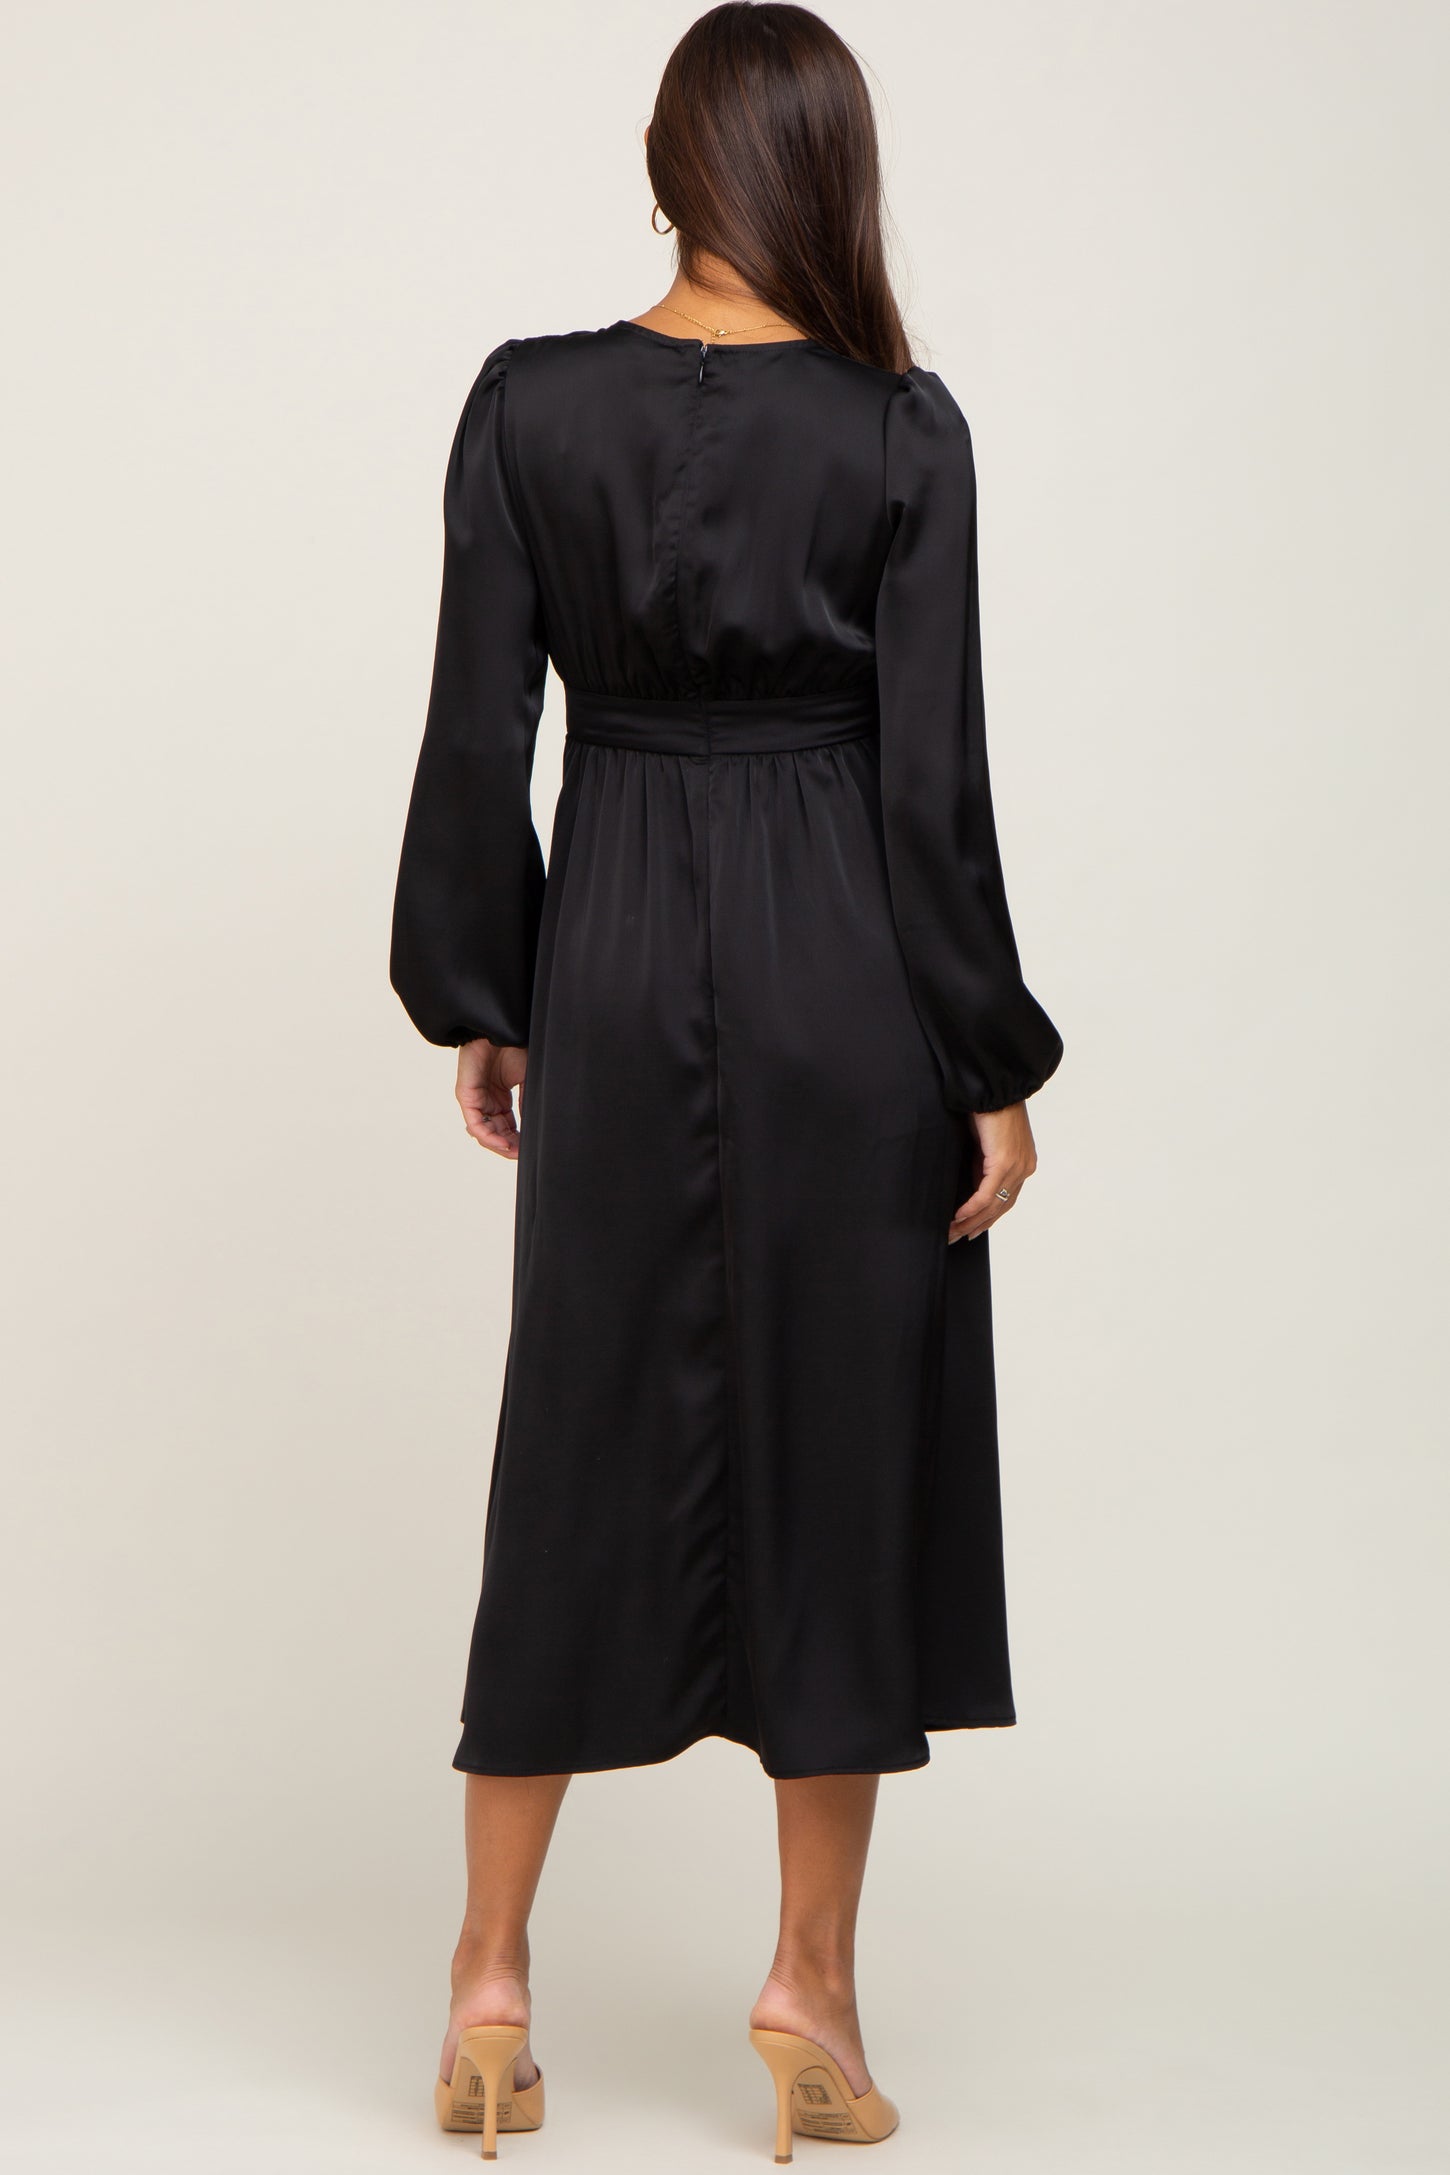 Black Satin Tie Front Cutout Maternity Midi Dress